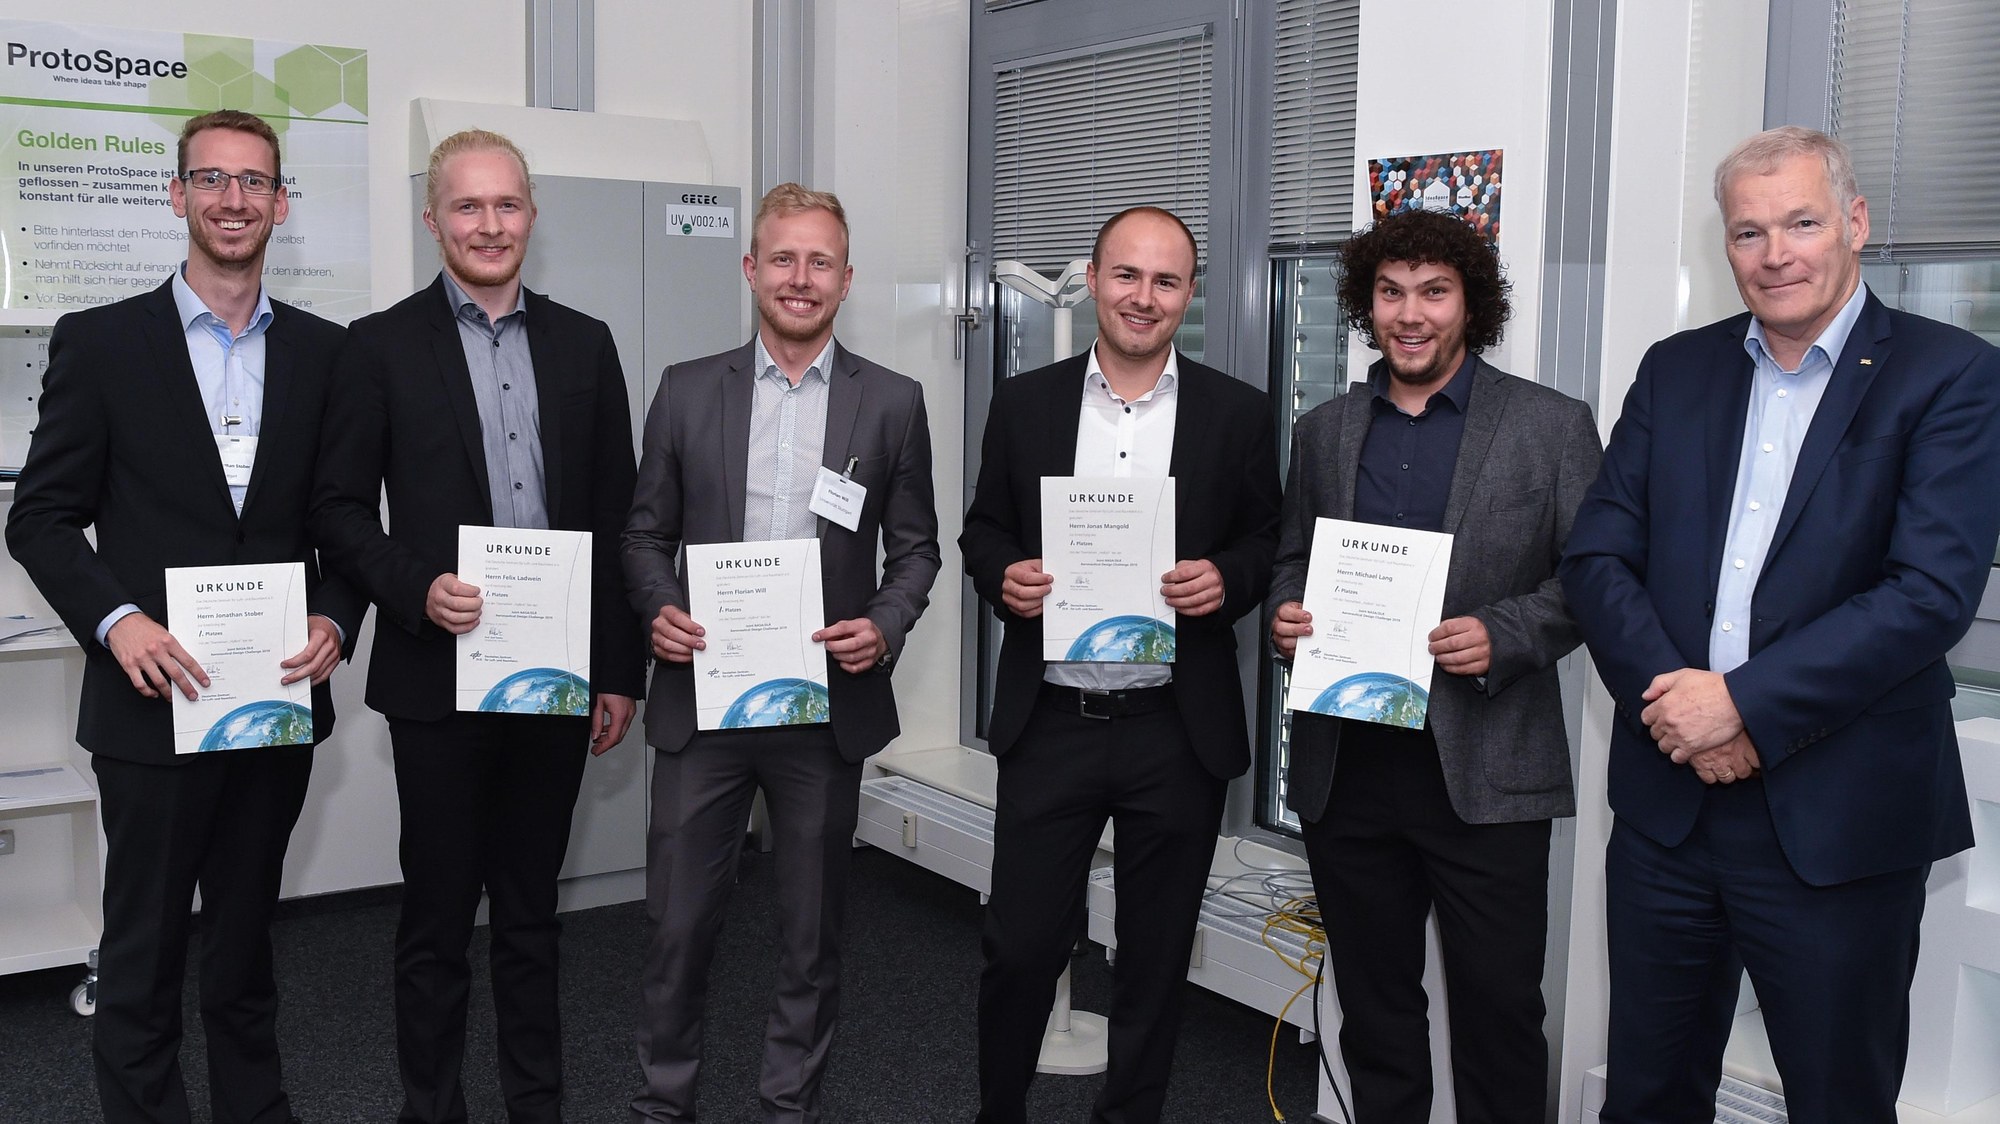 The team from the University of Stuttgart won the NASA/DLR Design Challenge